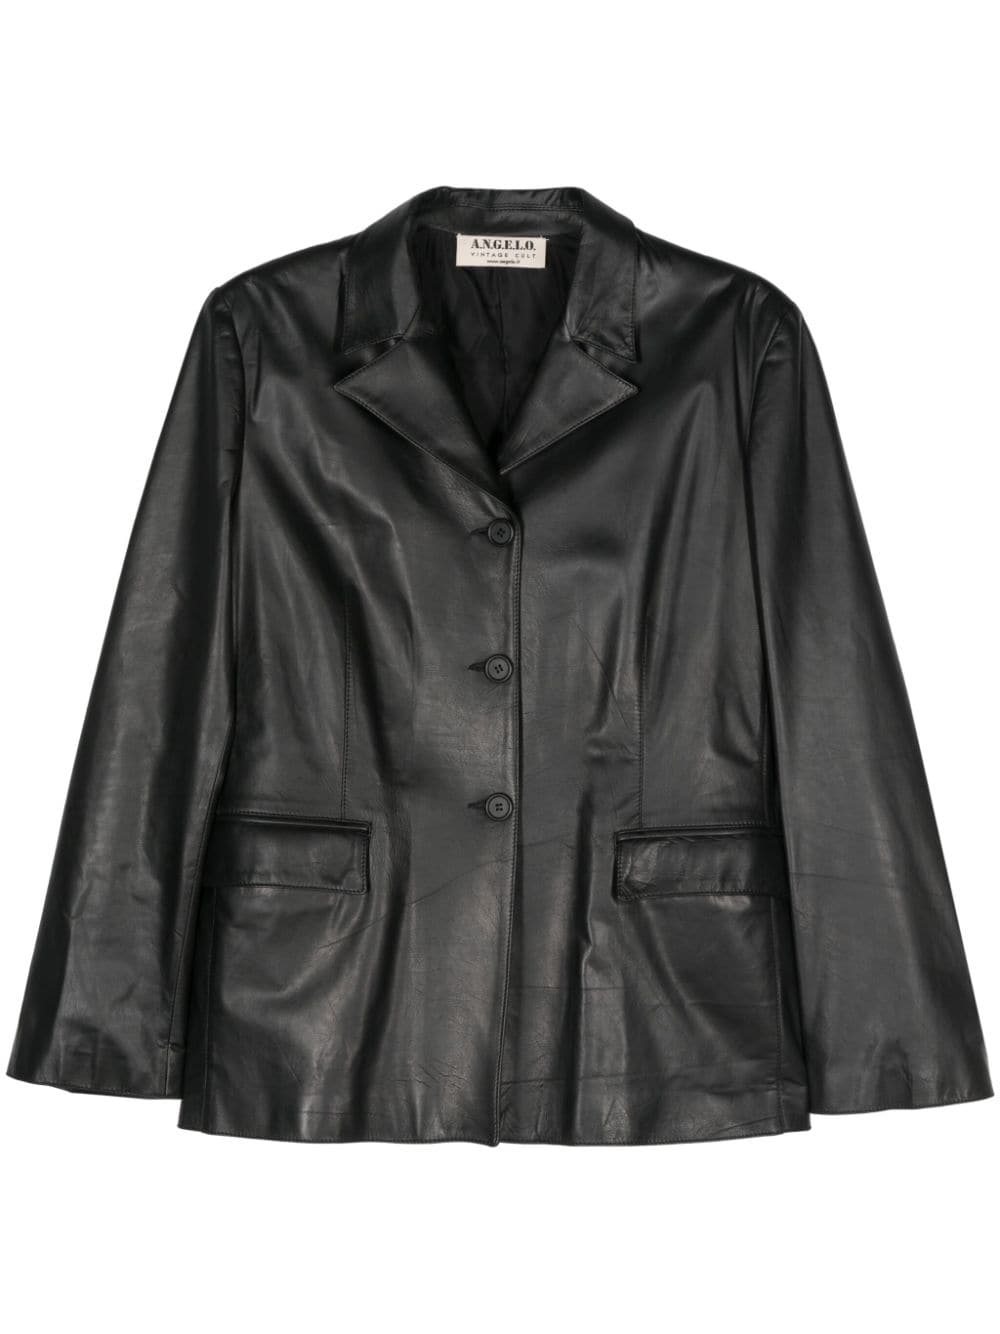 2000s peak-lapels leather jacket